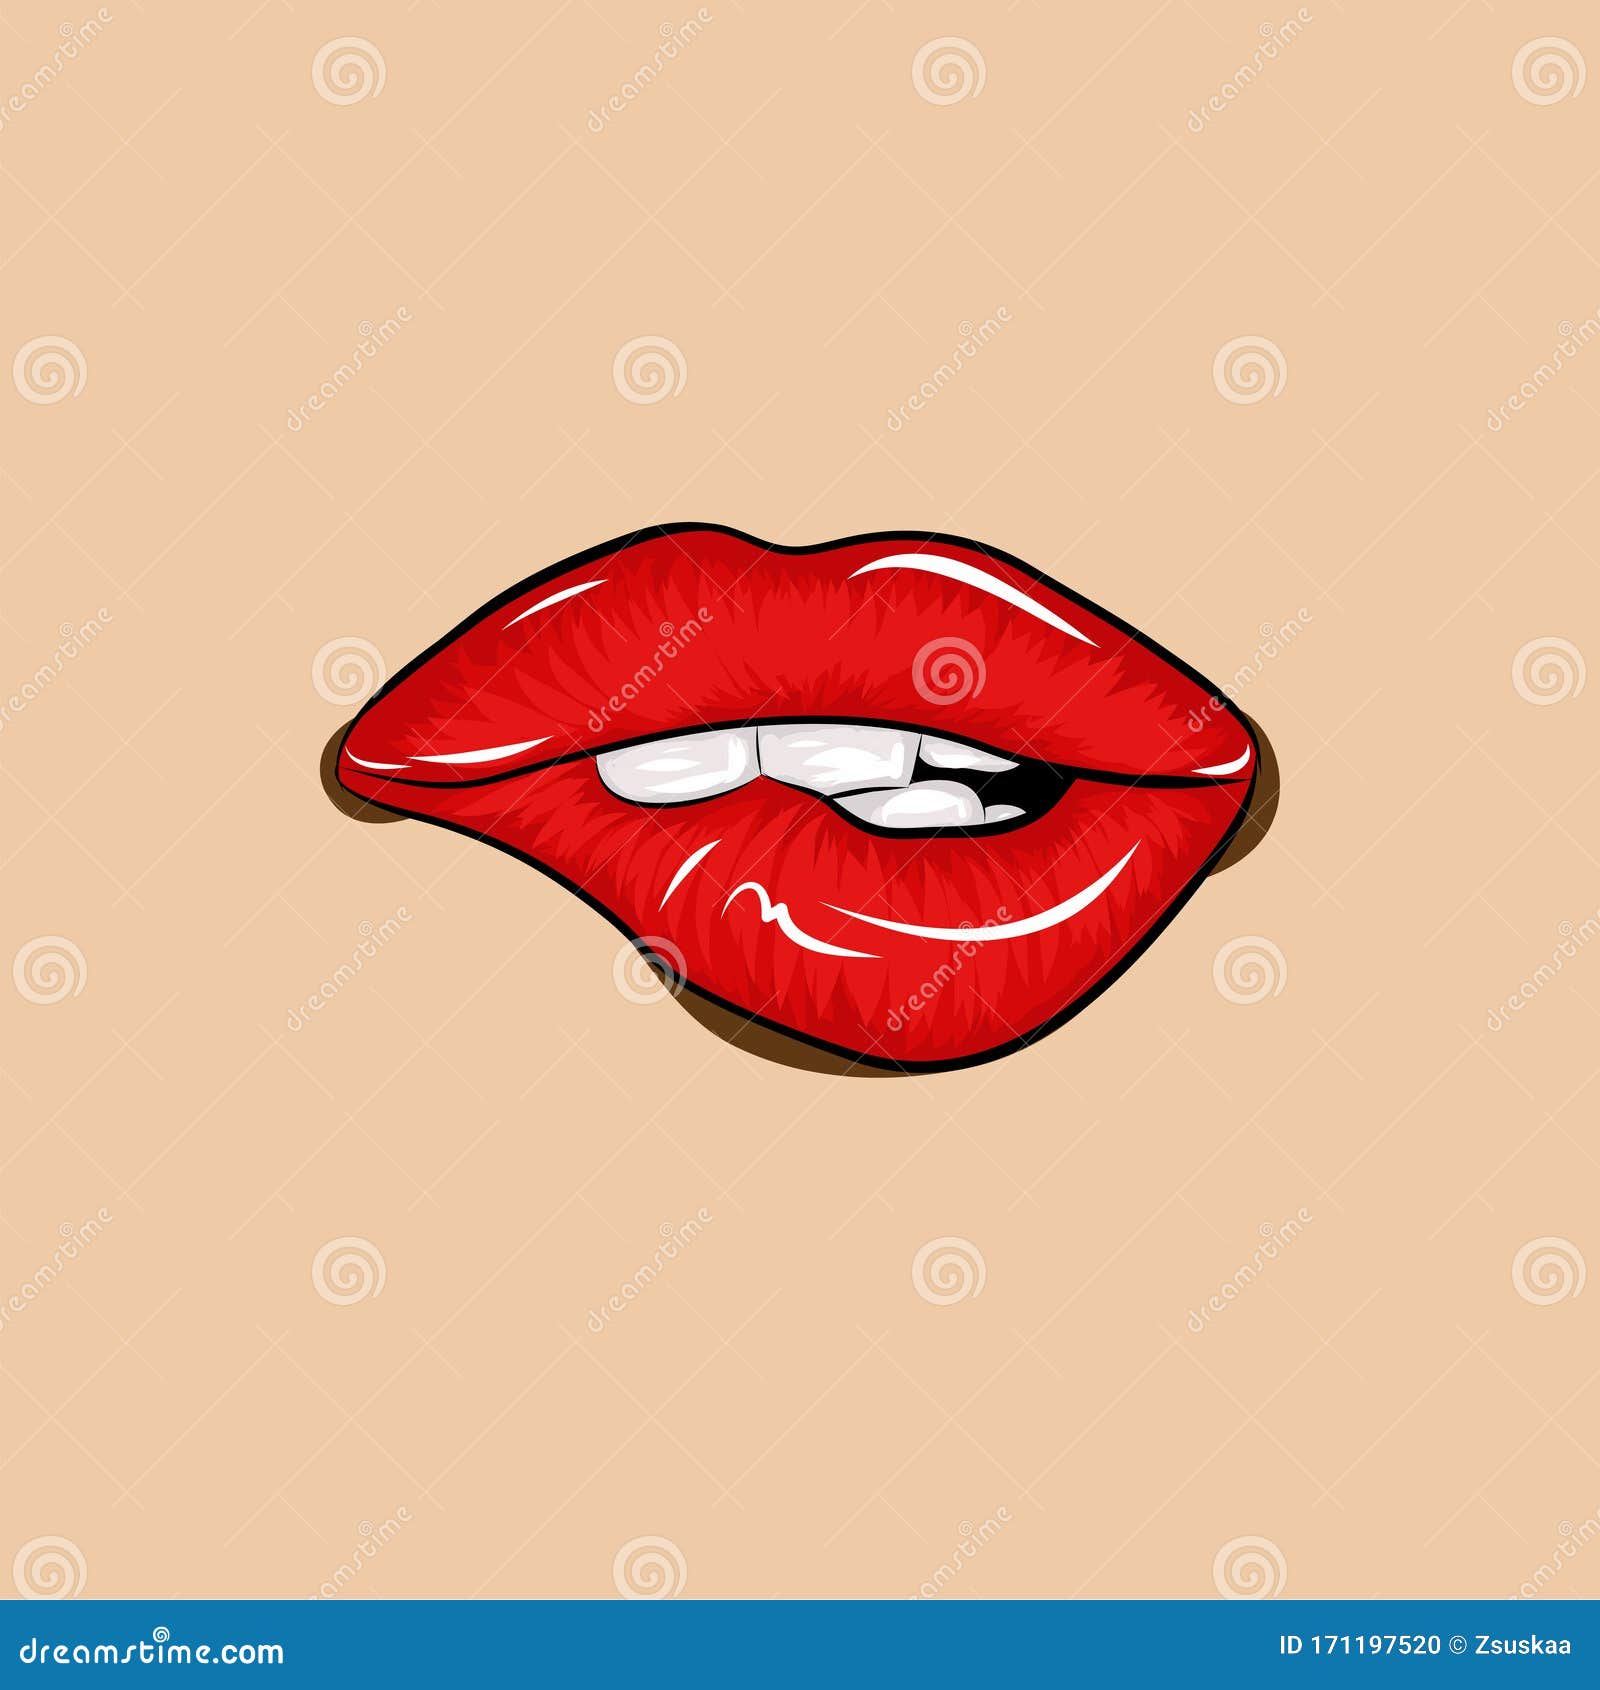 Lips Drawing Images - Free Download on Freepik